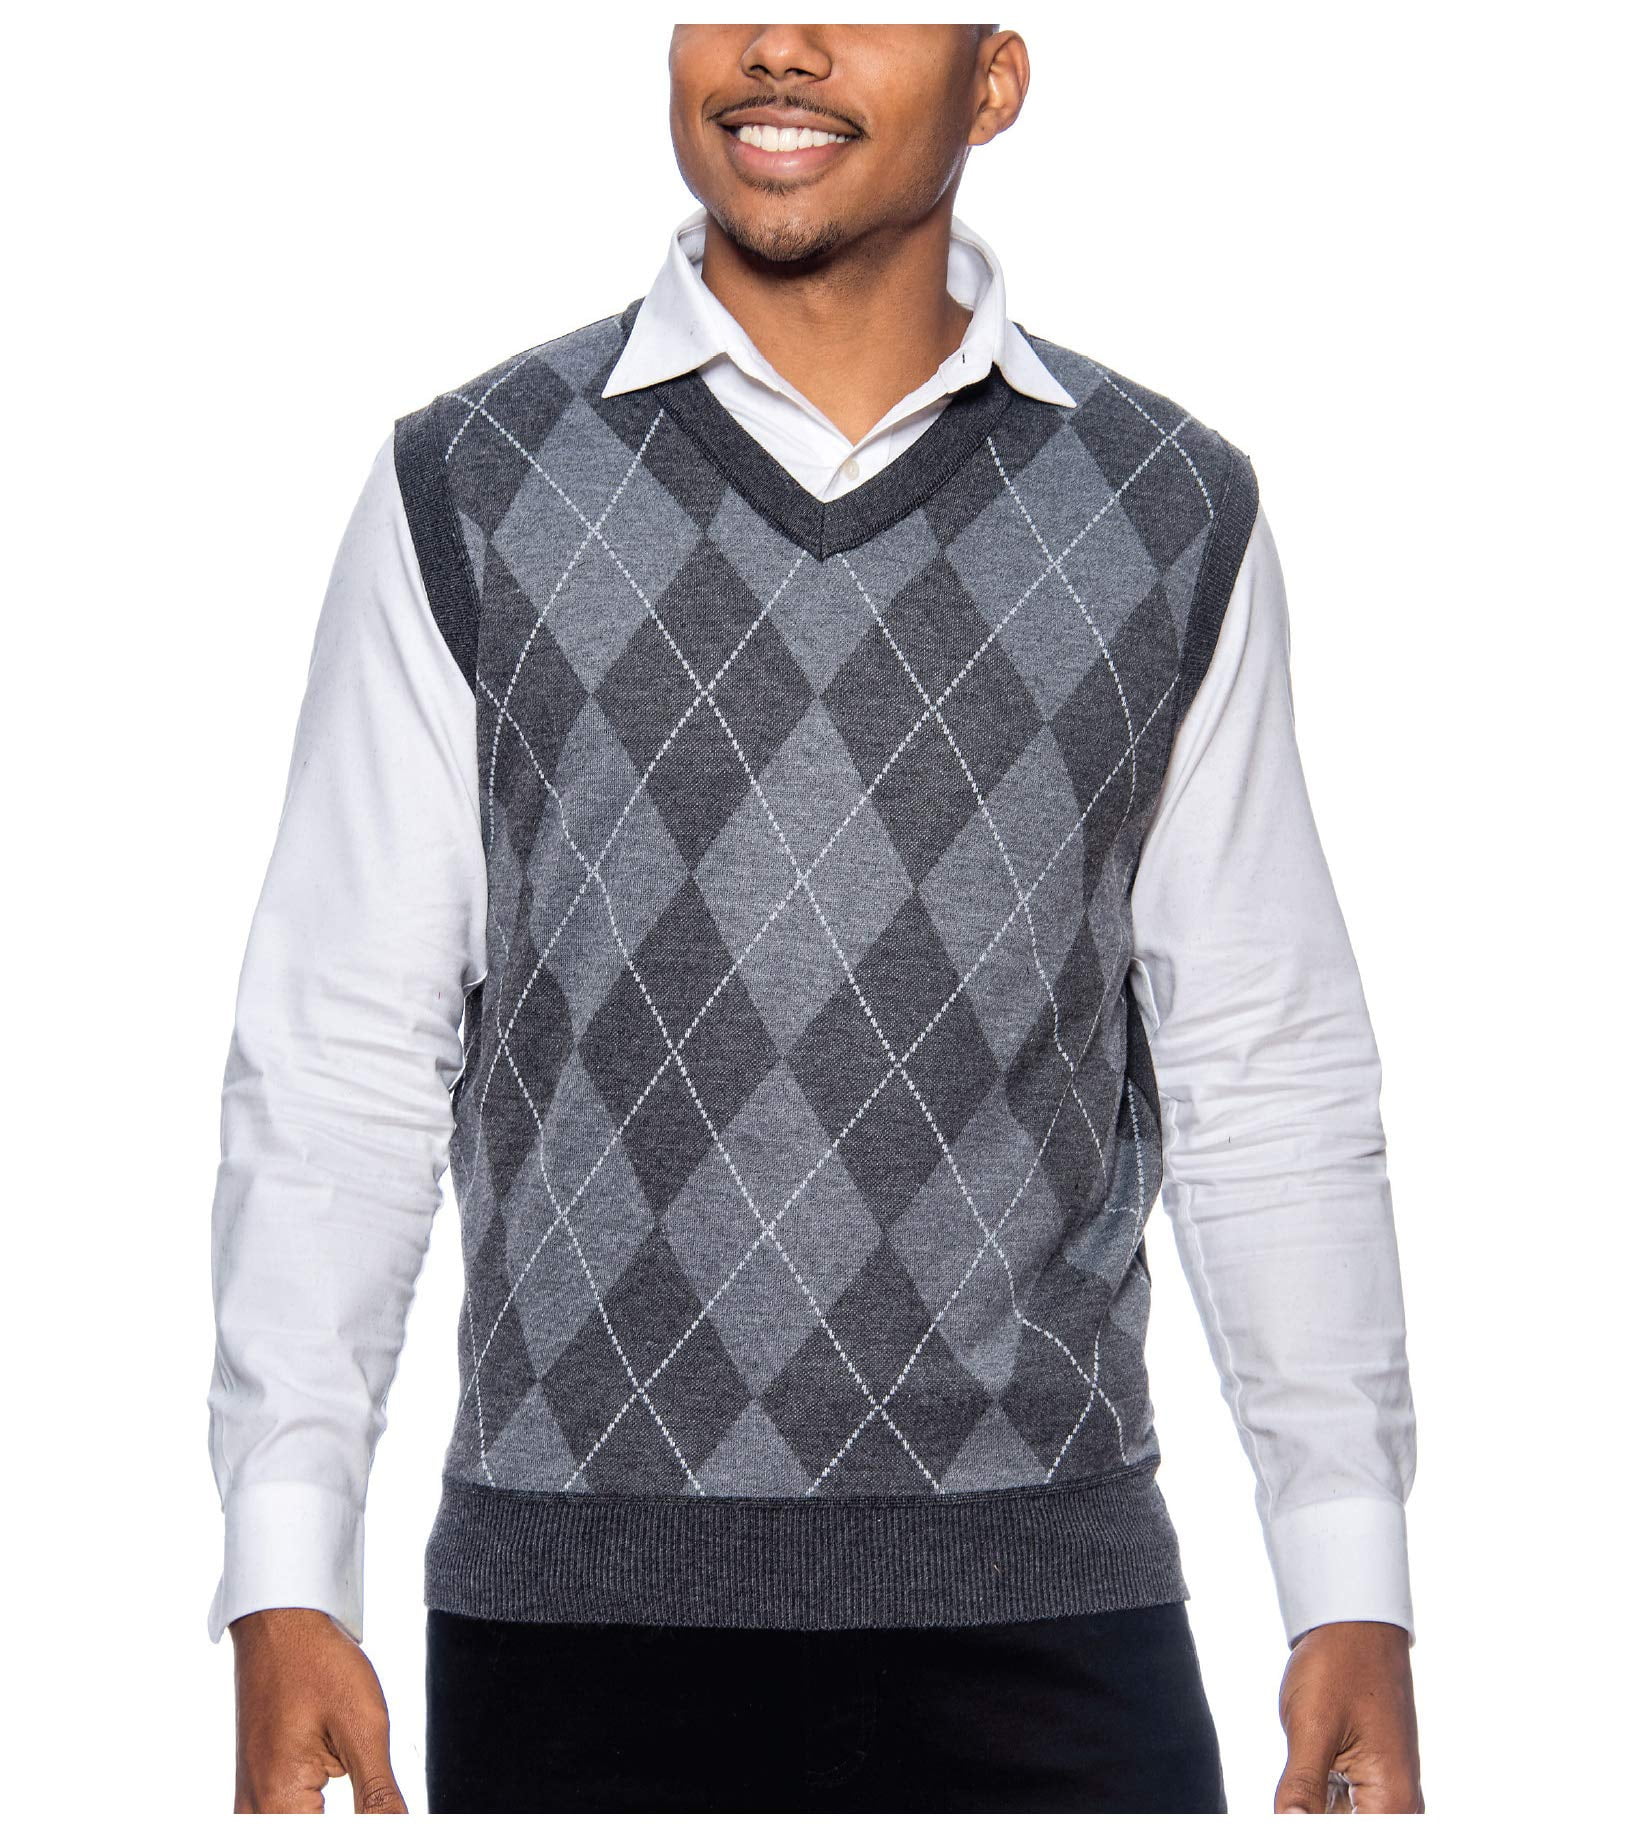 True Rock Men's Argyle V-Neck Sweater Vest (Black/Gray, X-Large)